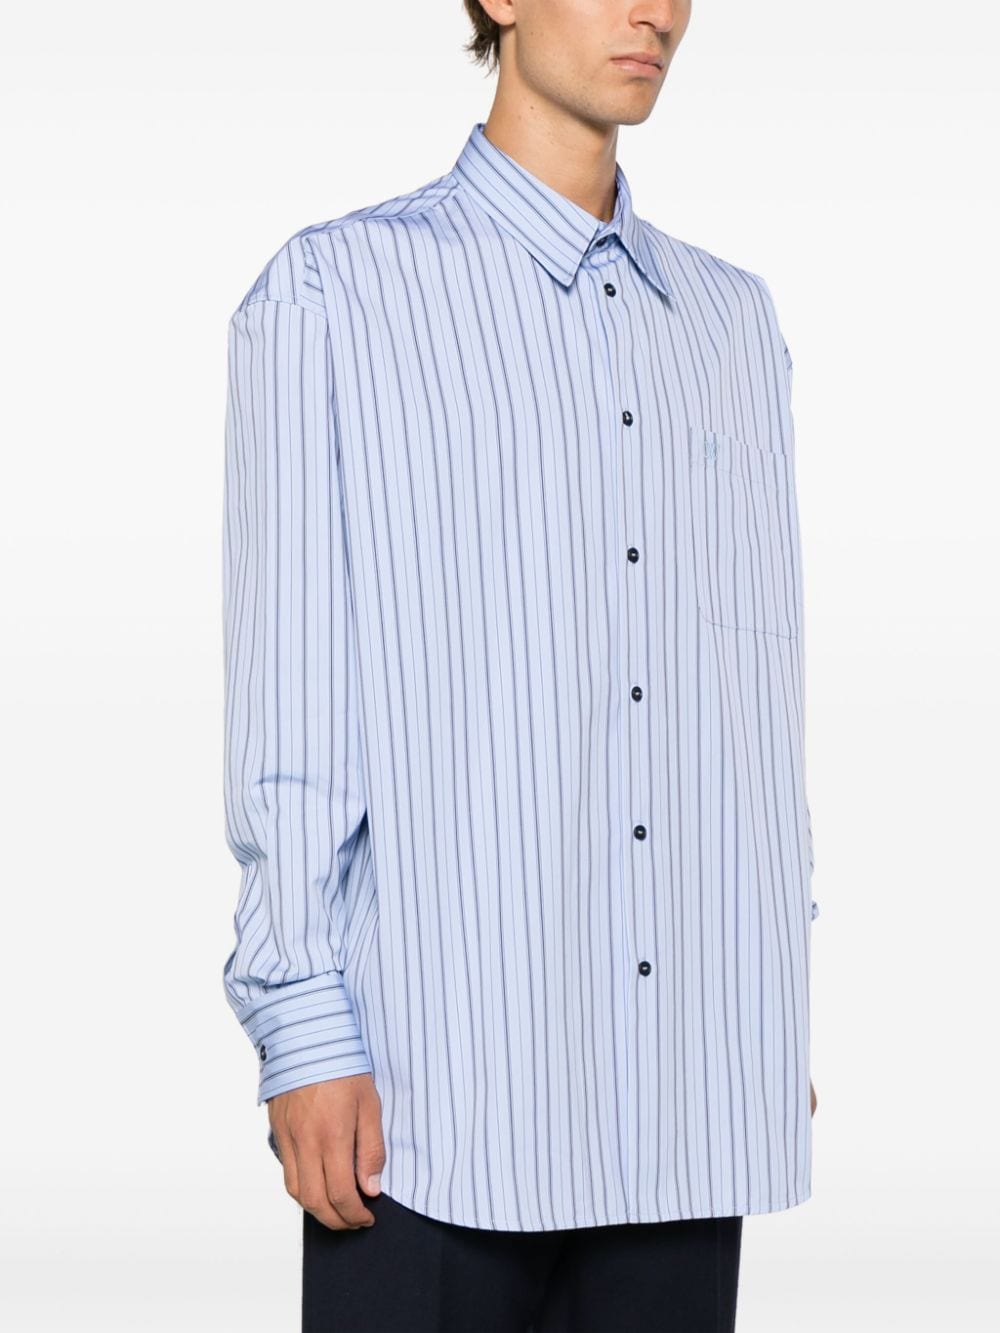 Vertical stripe pattern shirt